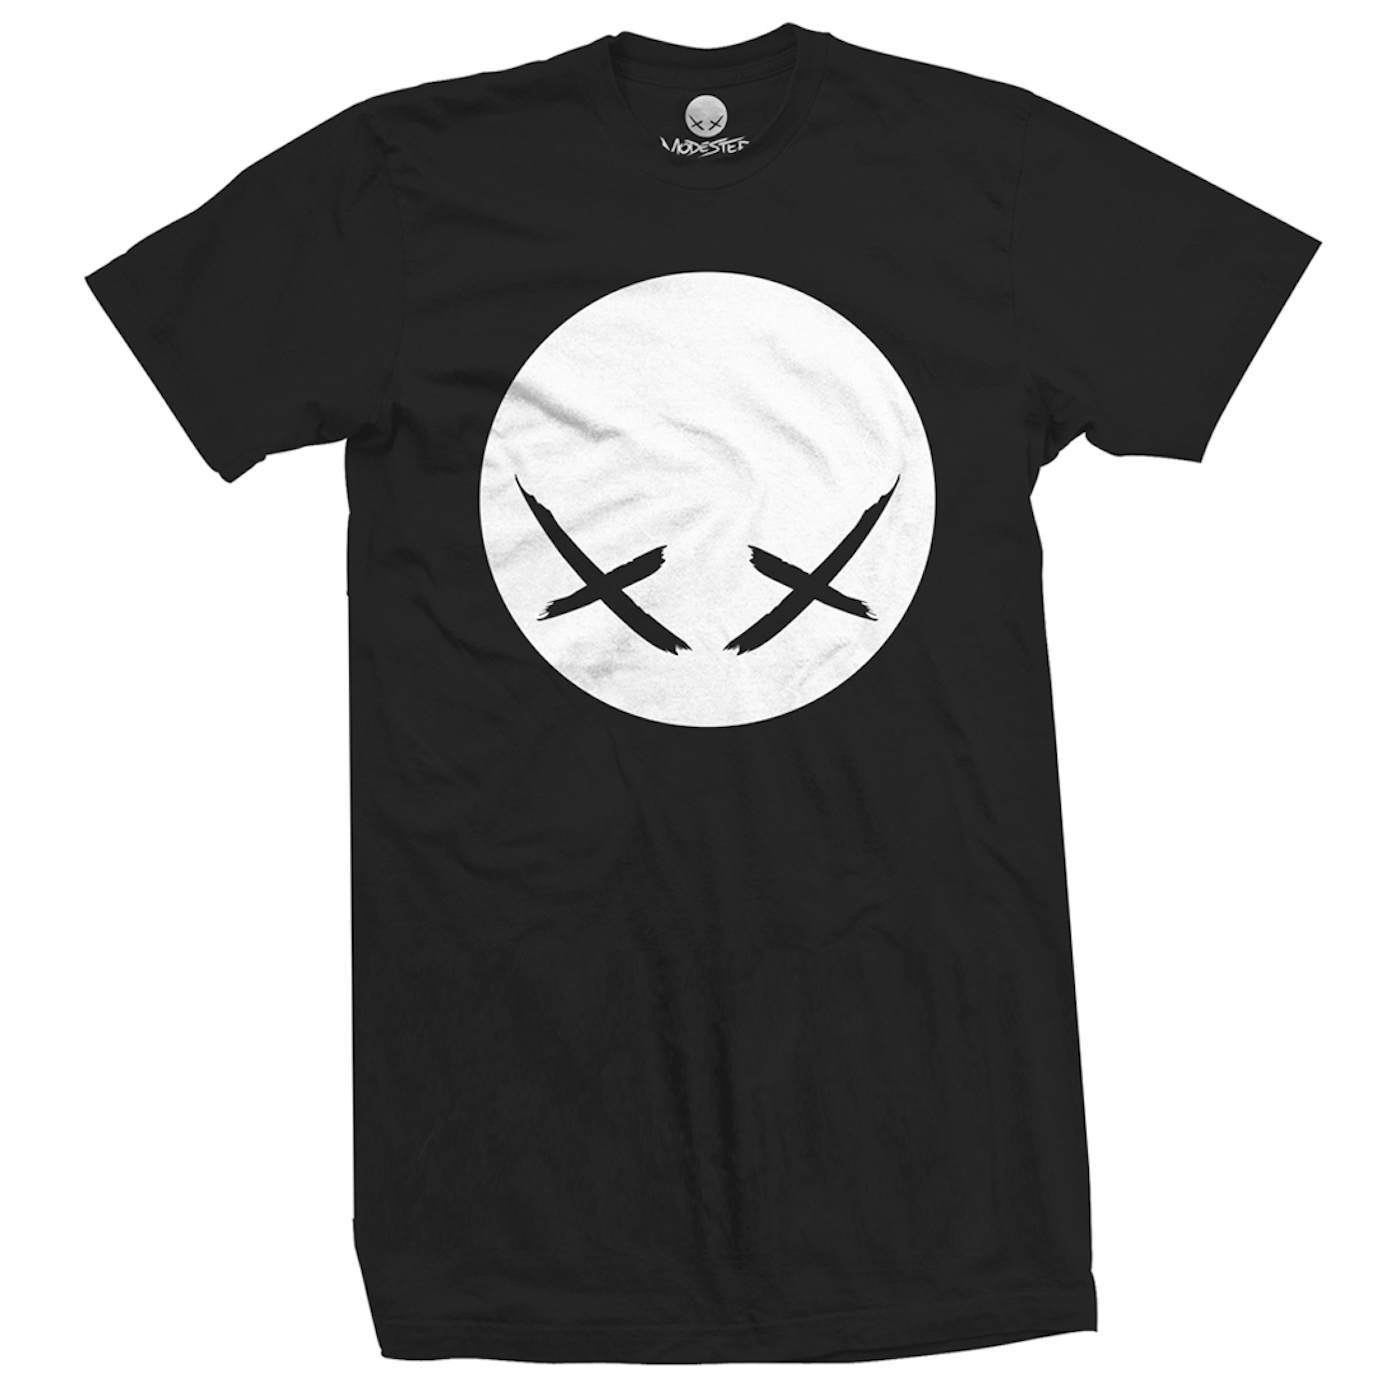 Modestep Limited Edition Logo Longline T-Shirt